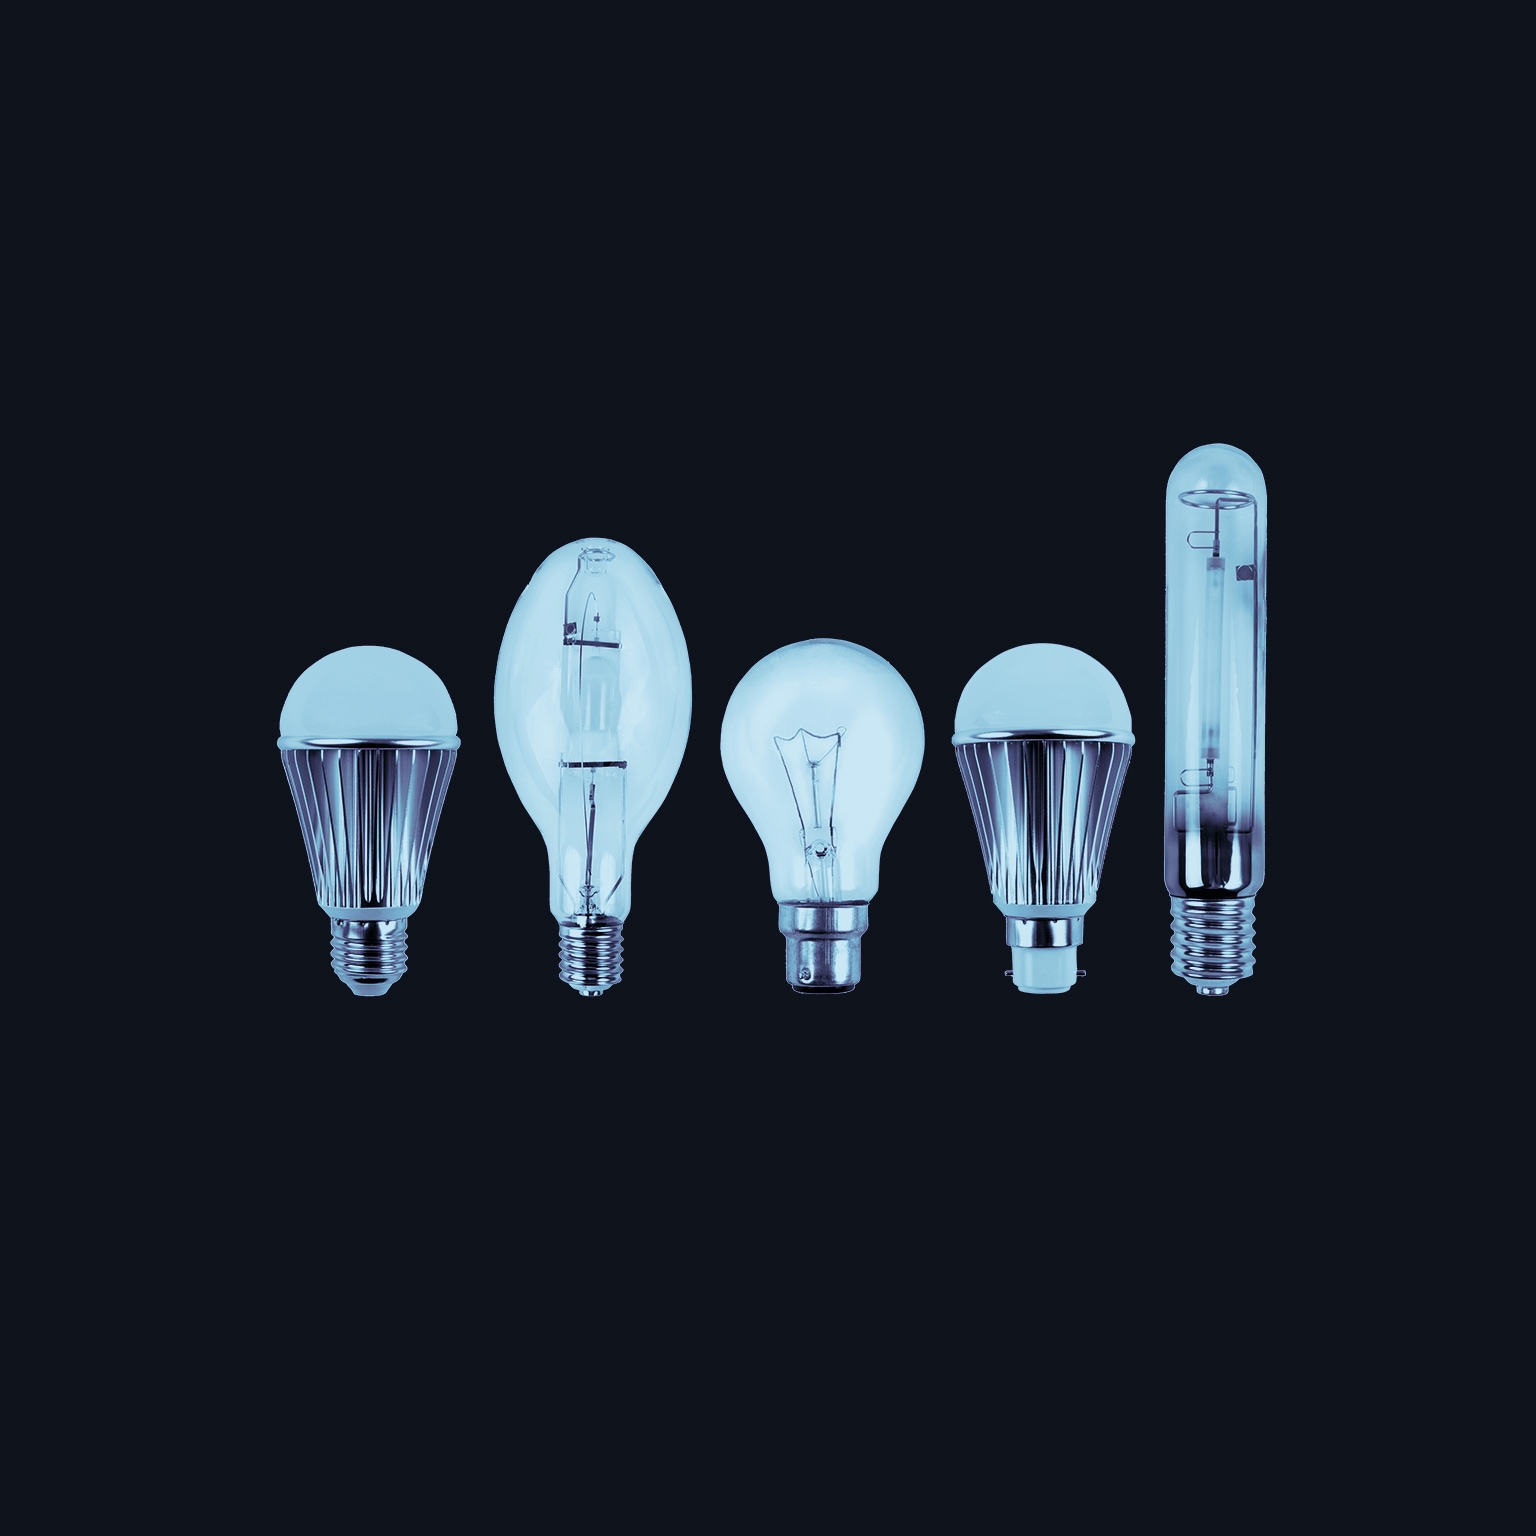 Image of various light bulbs